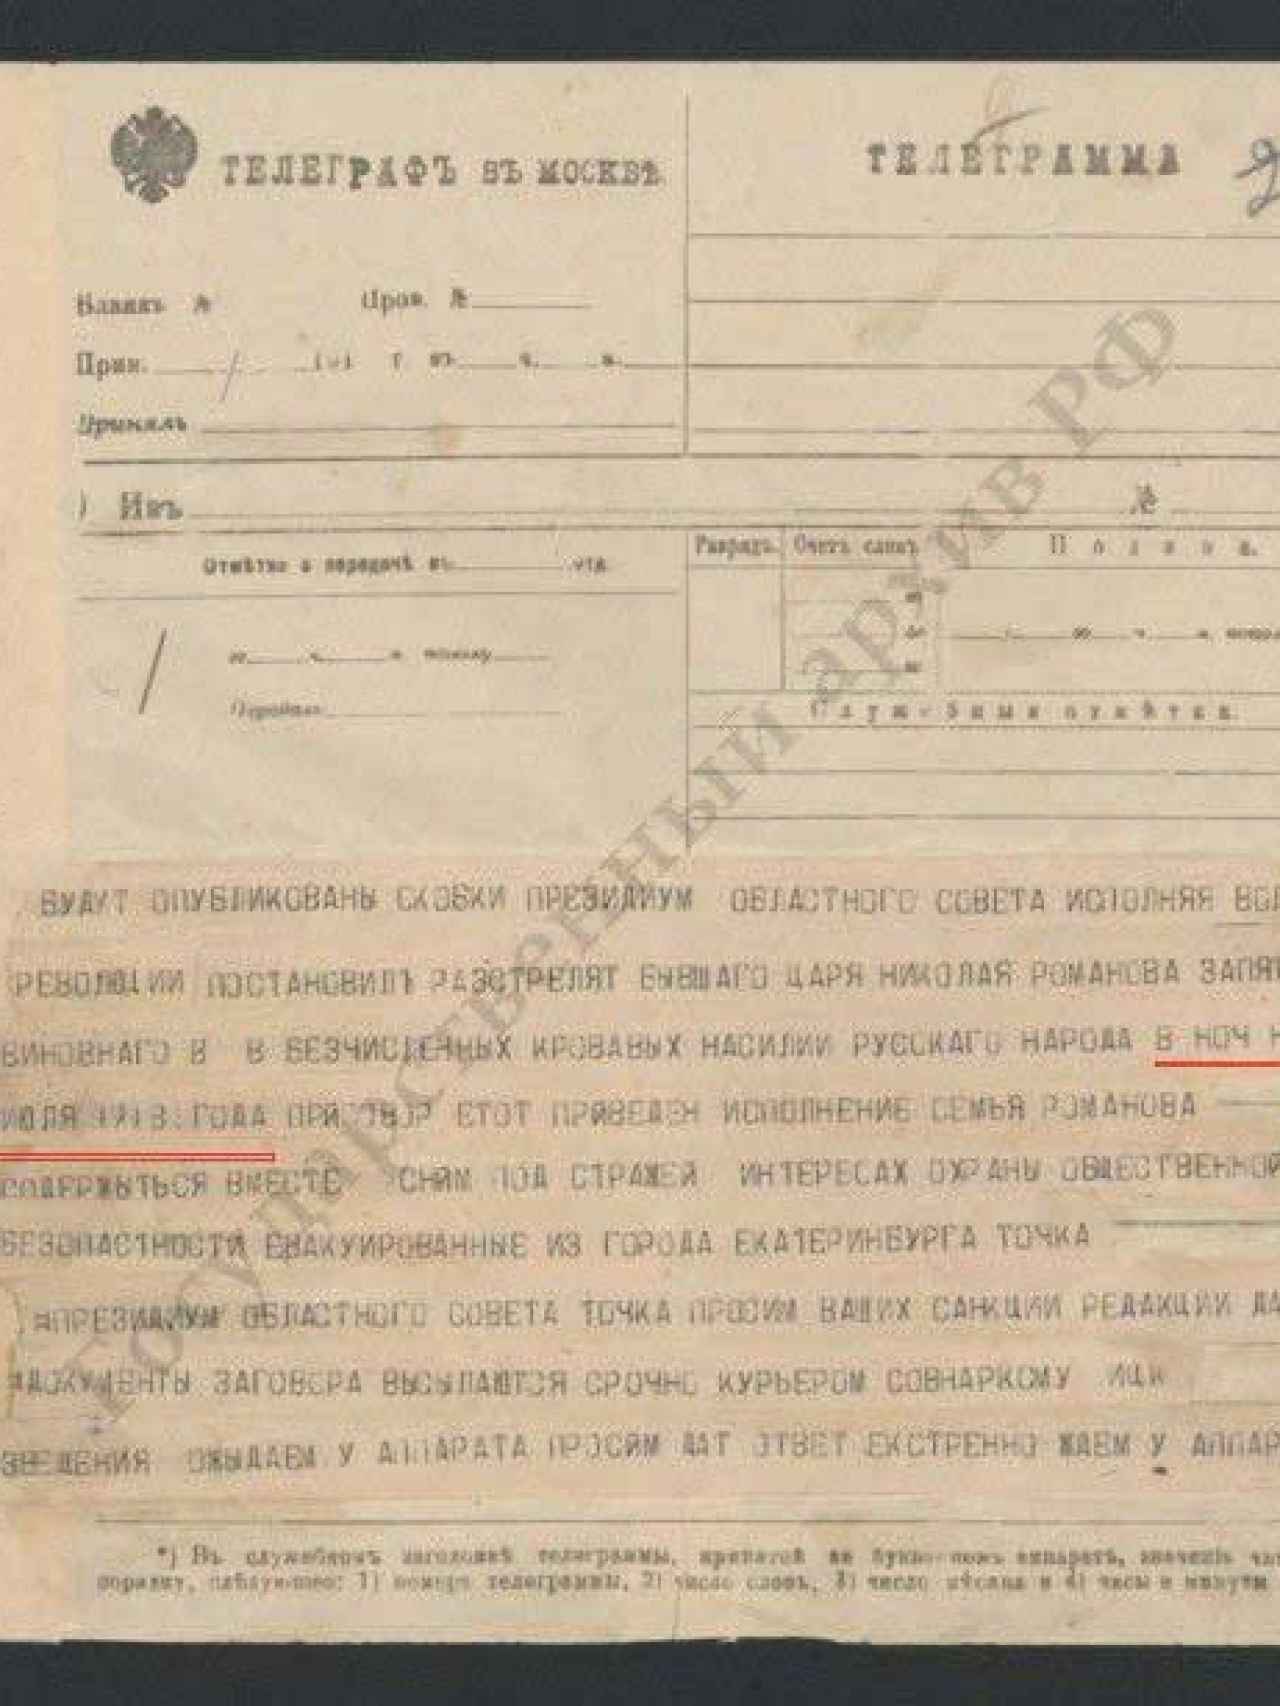 Telegrama enviado a Lenin y Sverdlov desde Ekaterimburgo.